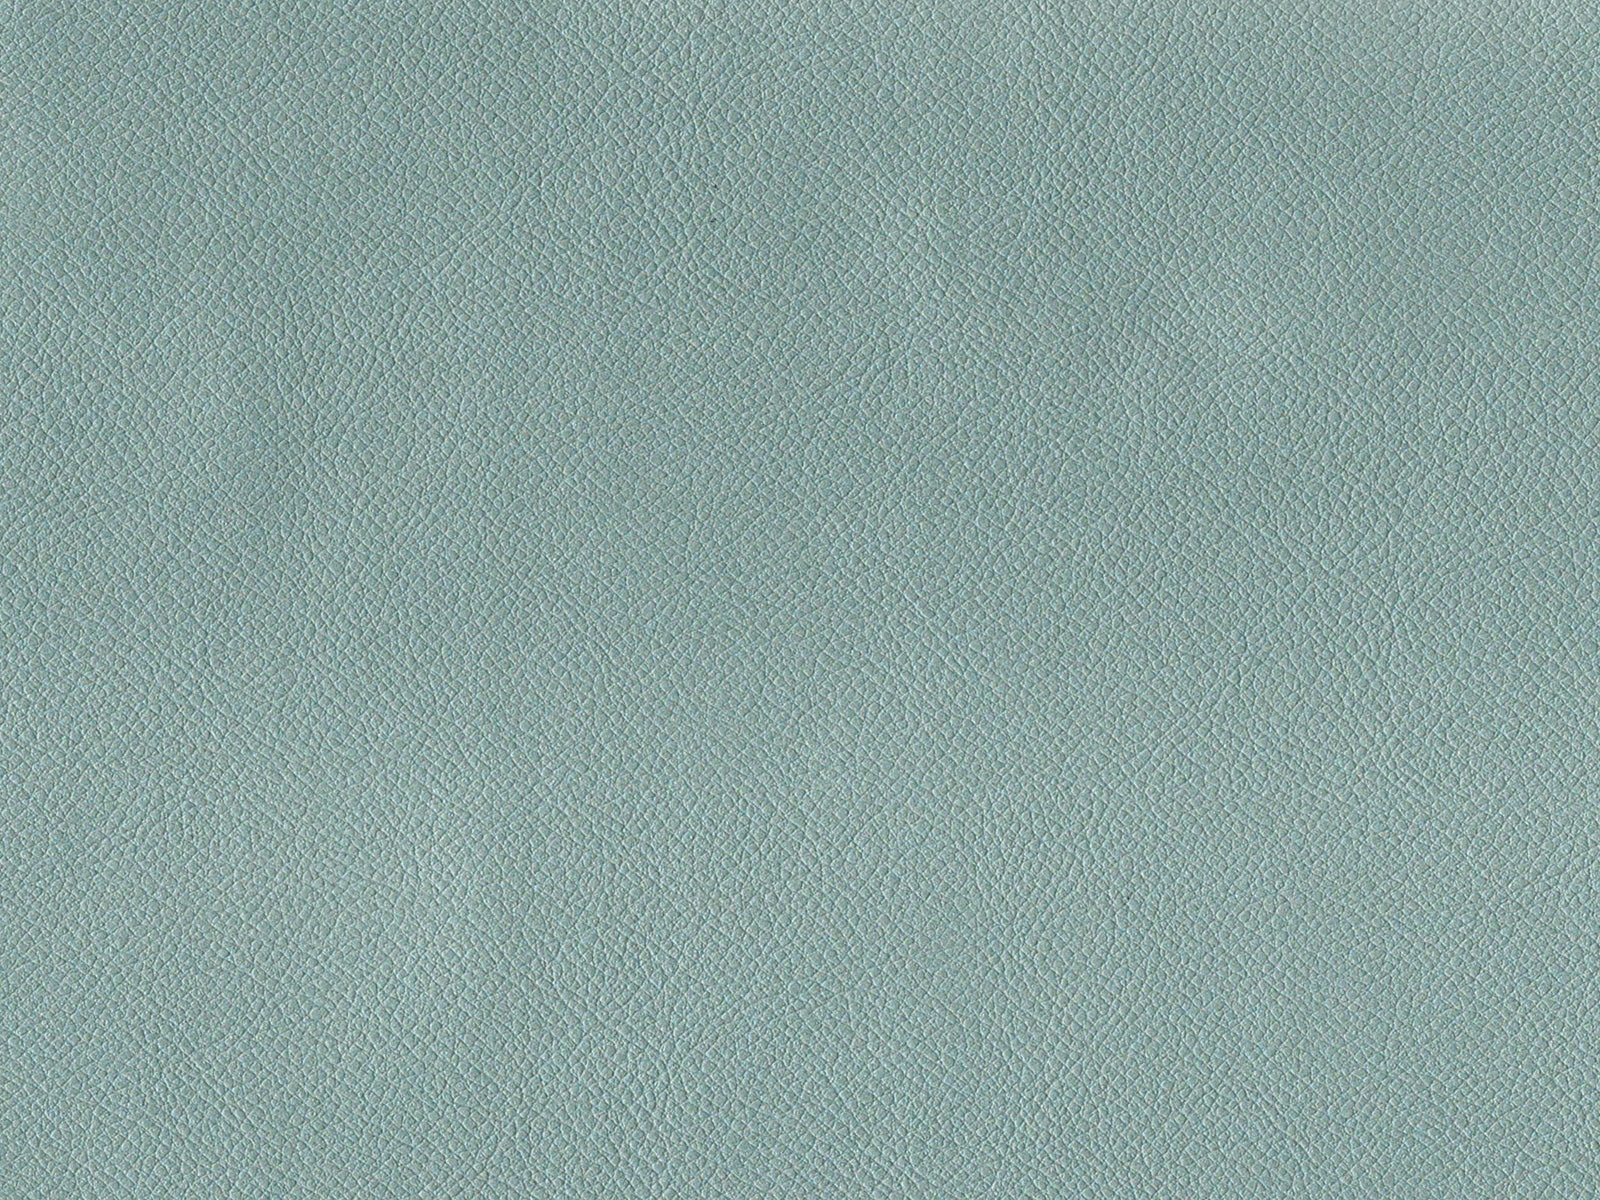 Enduro Fabric Samples - Rydan Interiors